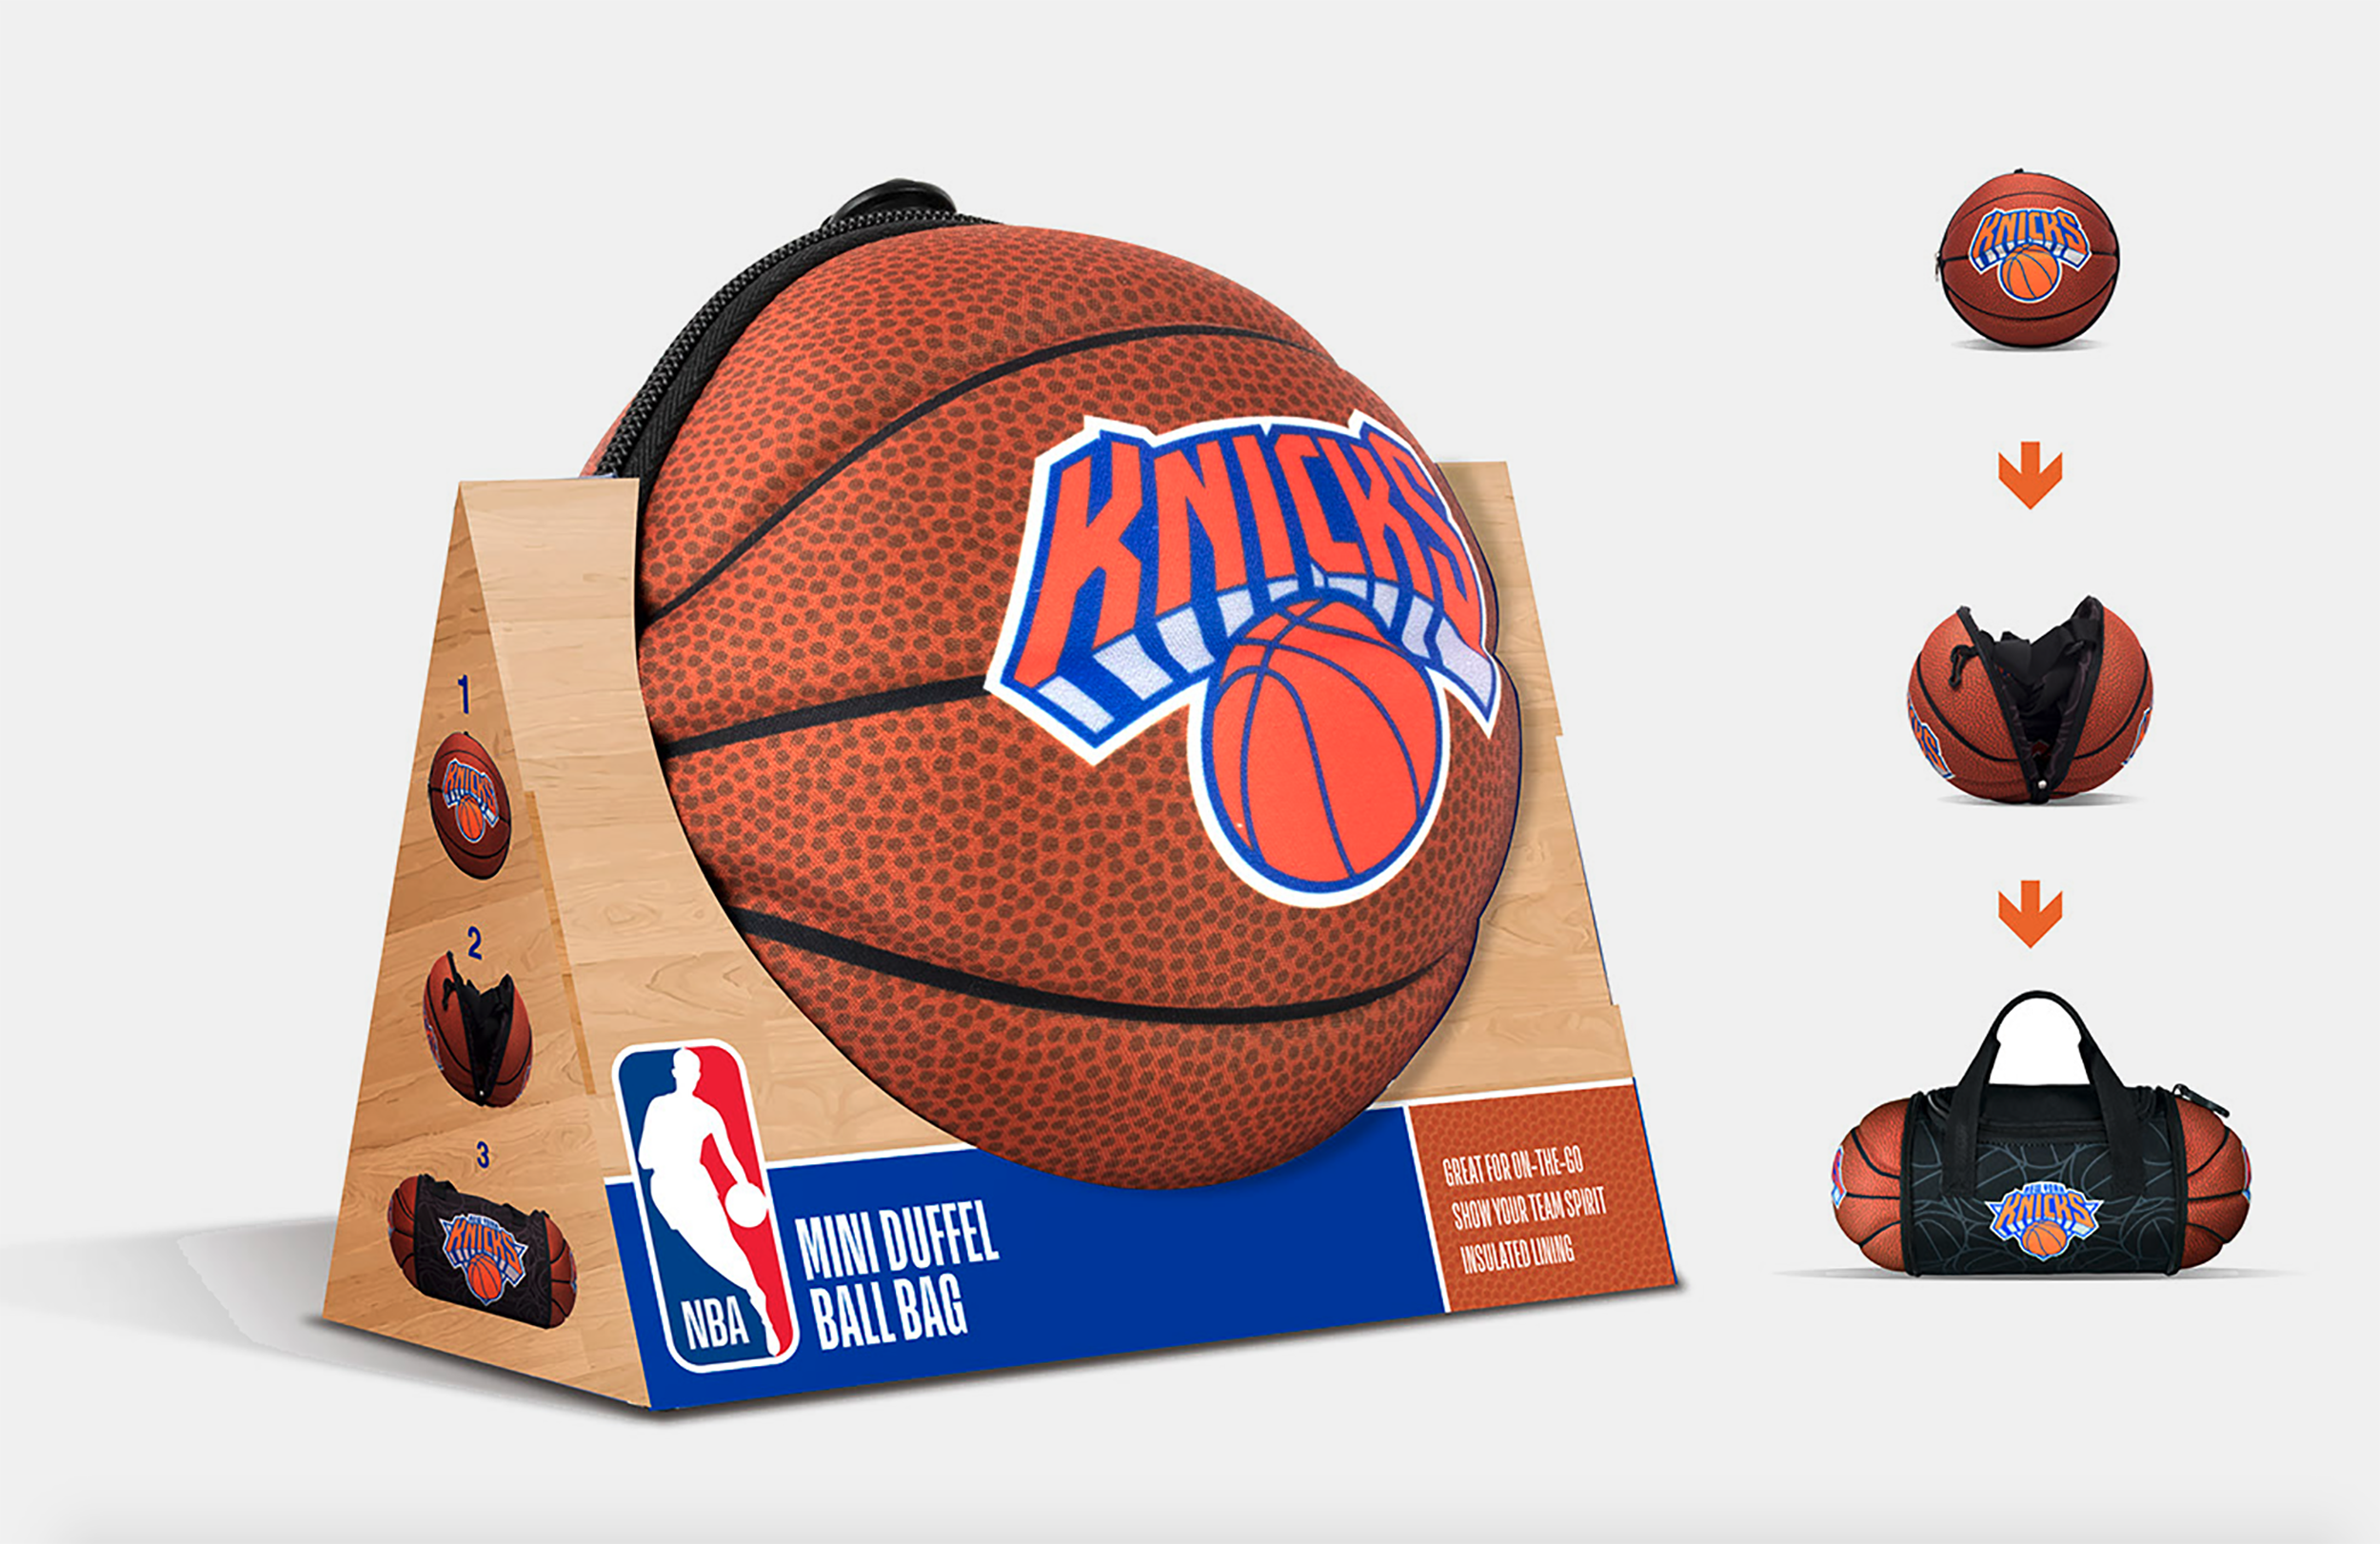 Packaging for NBA Ball Bag